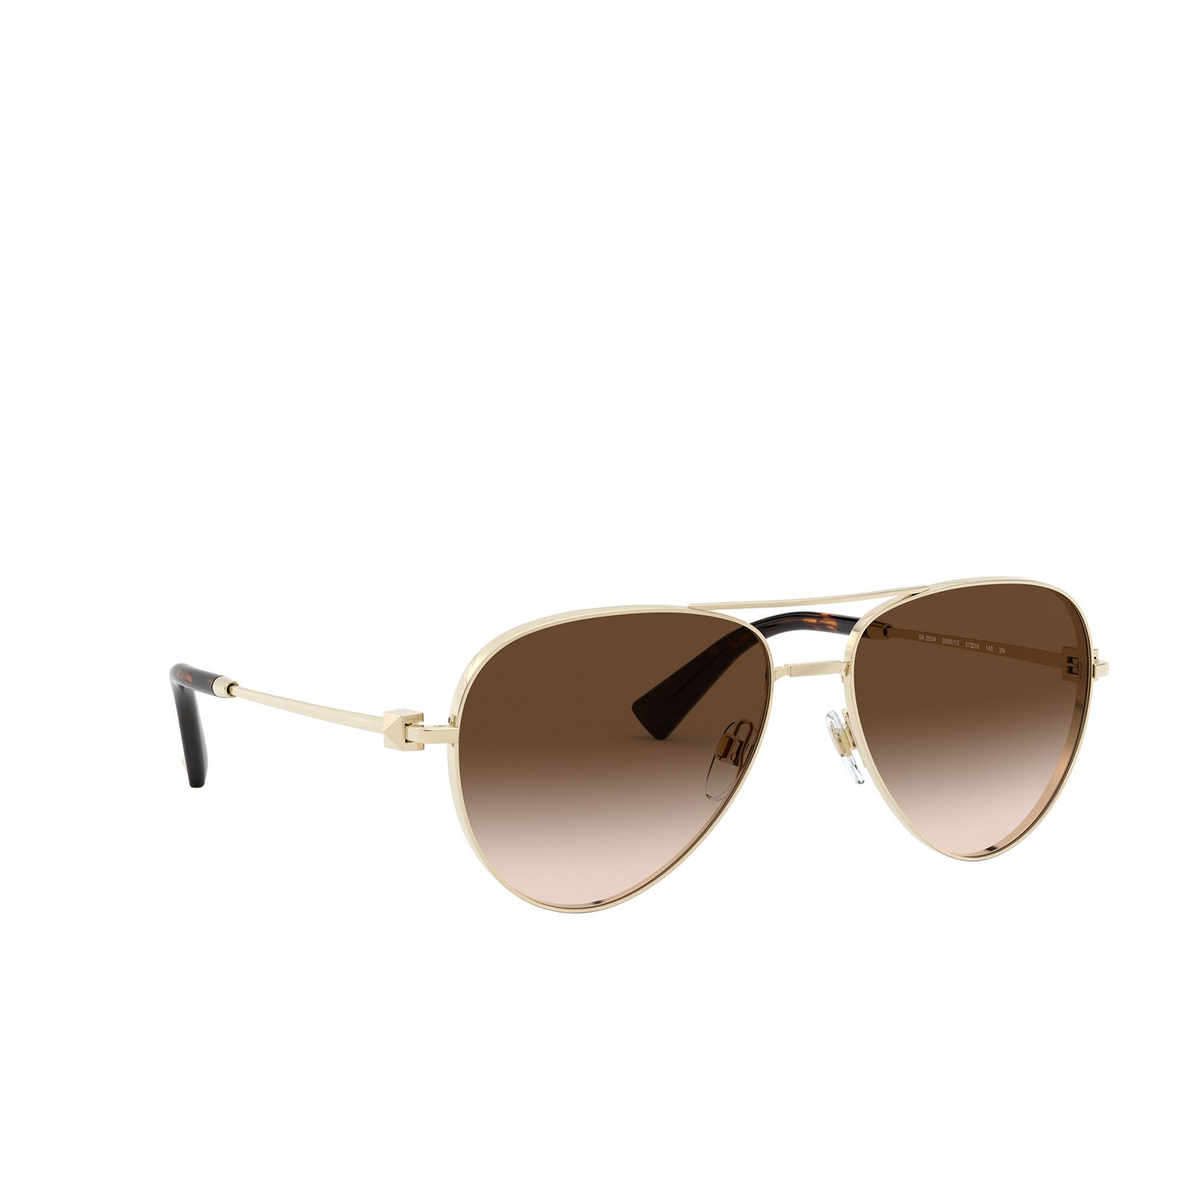 Valentino® Aviator Sunglasses: VA2034 color Pale Gold 300313 - three-quarters view.